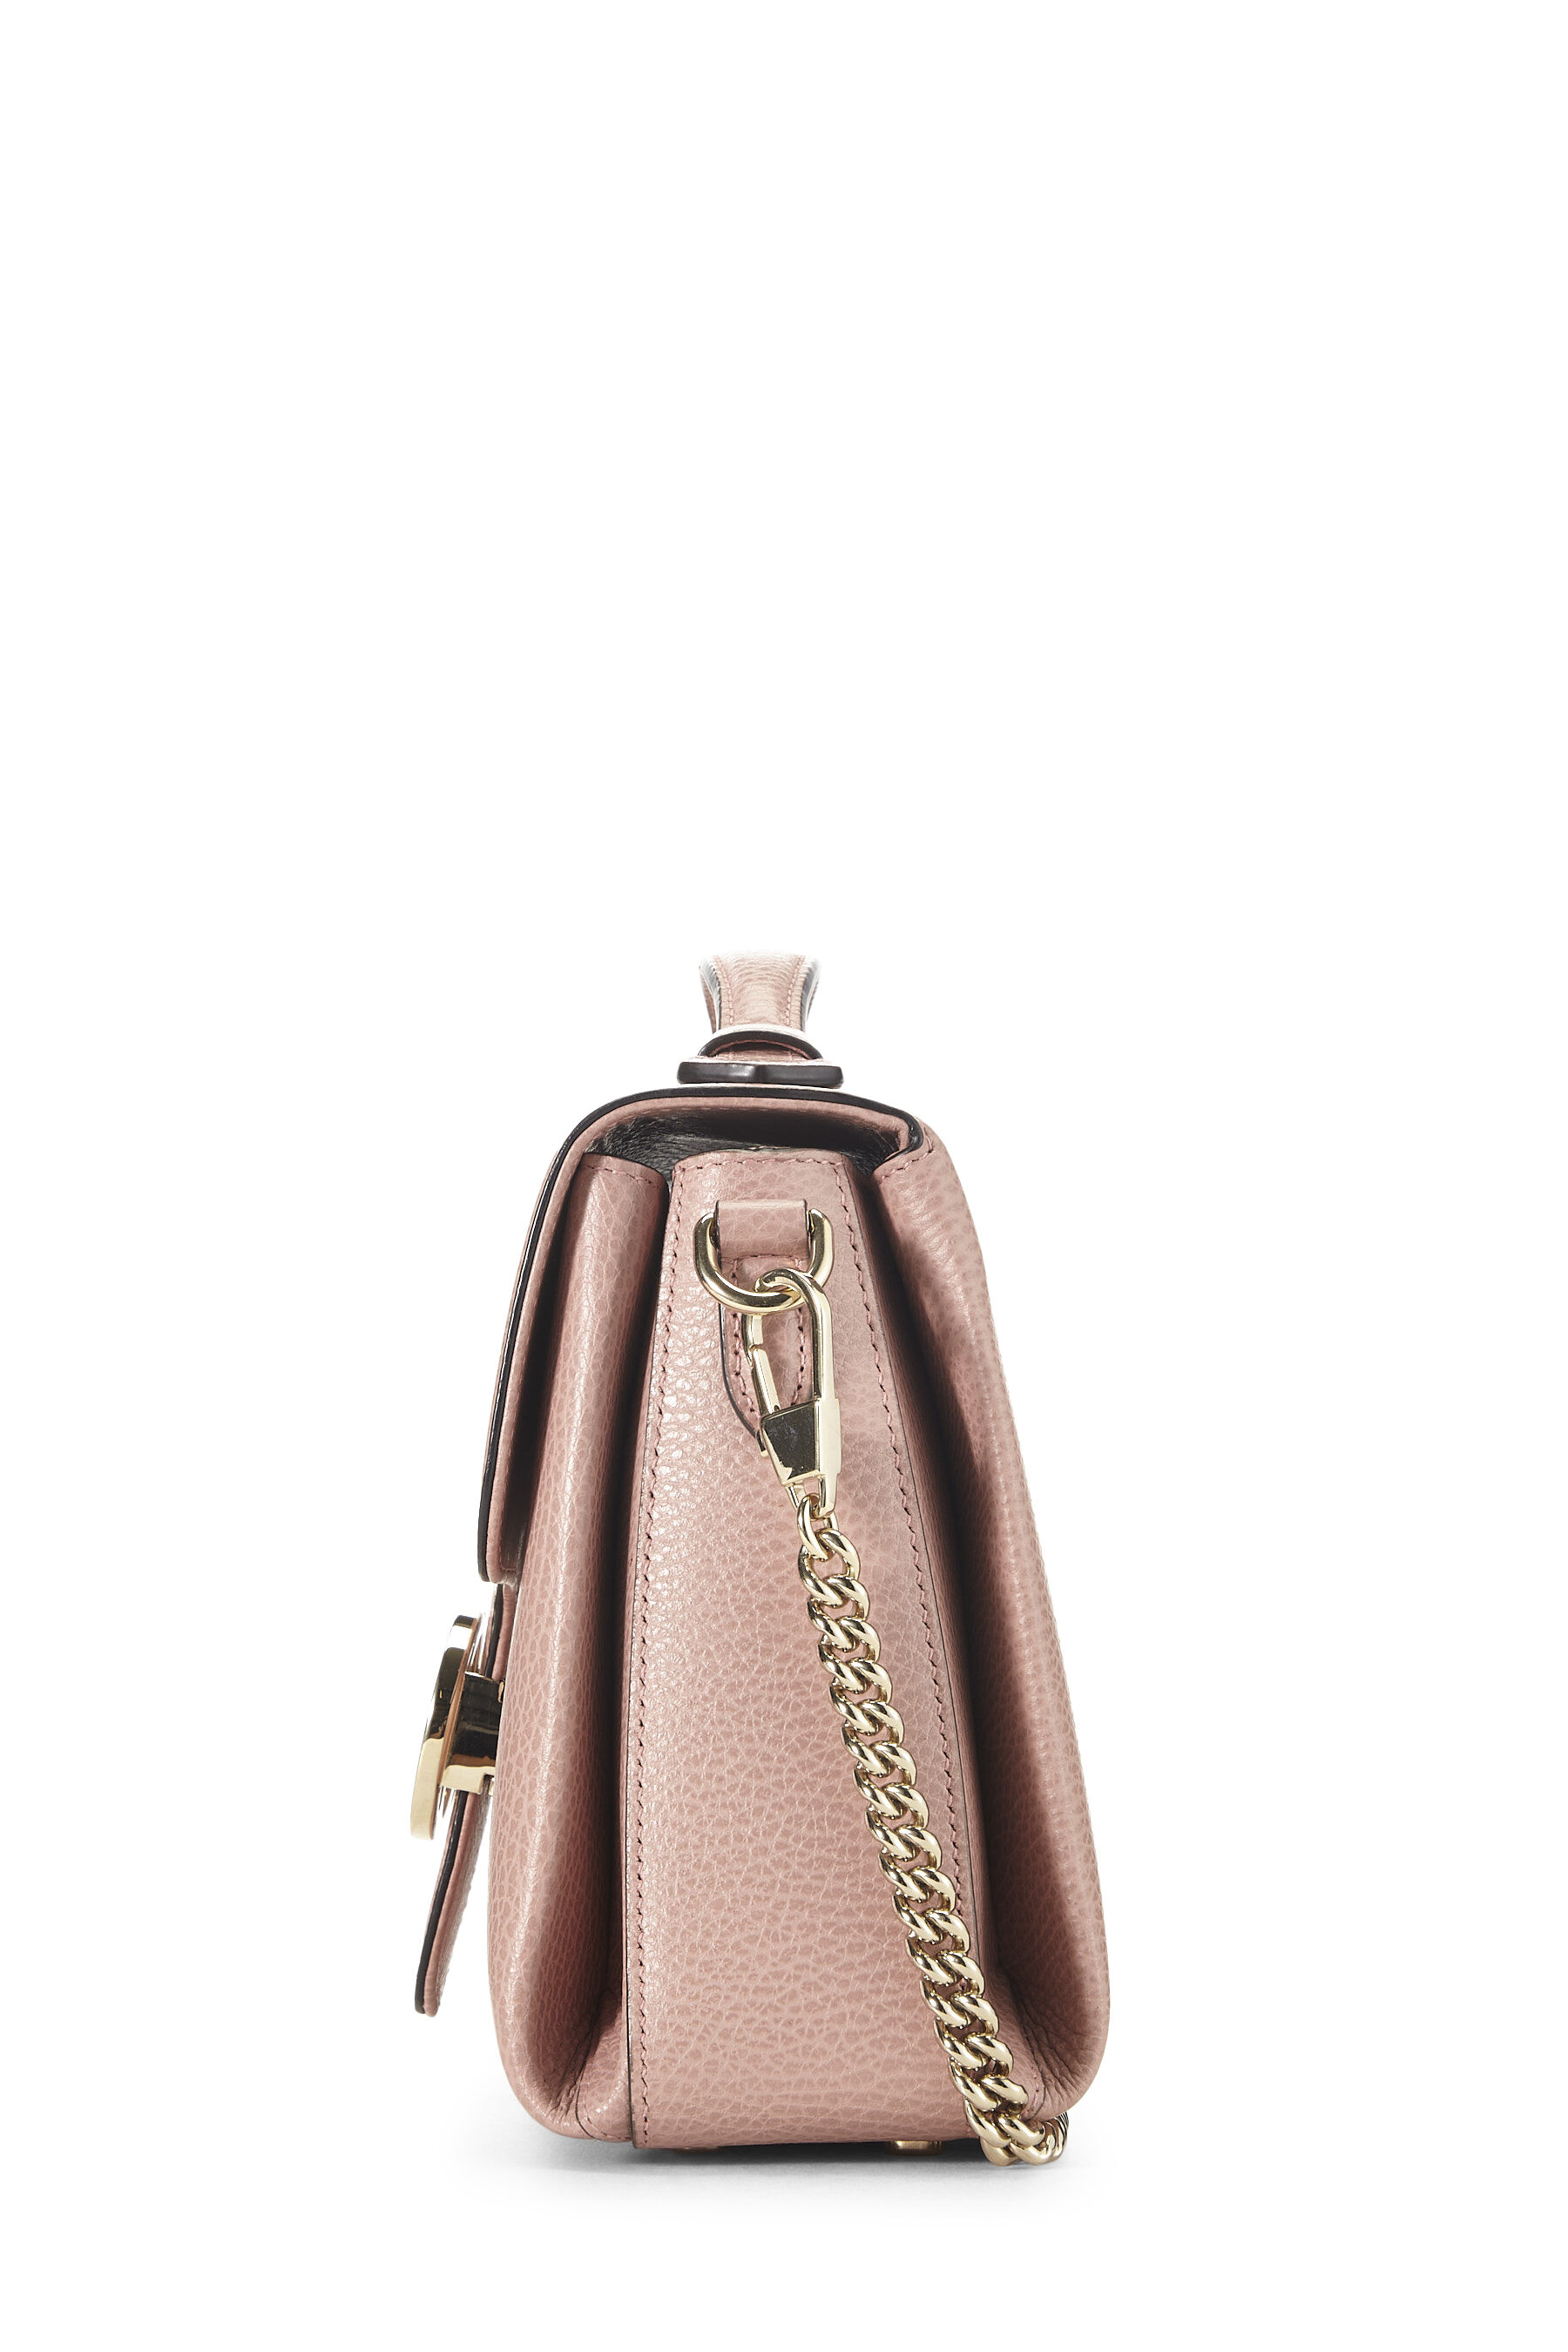 Pink Leather Interlocking Handle Bag